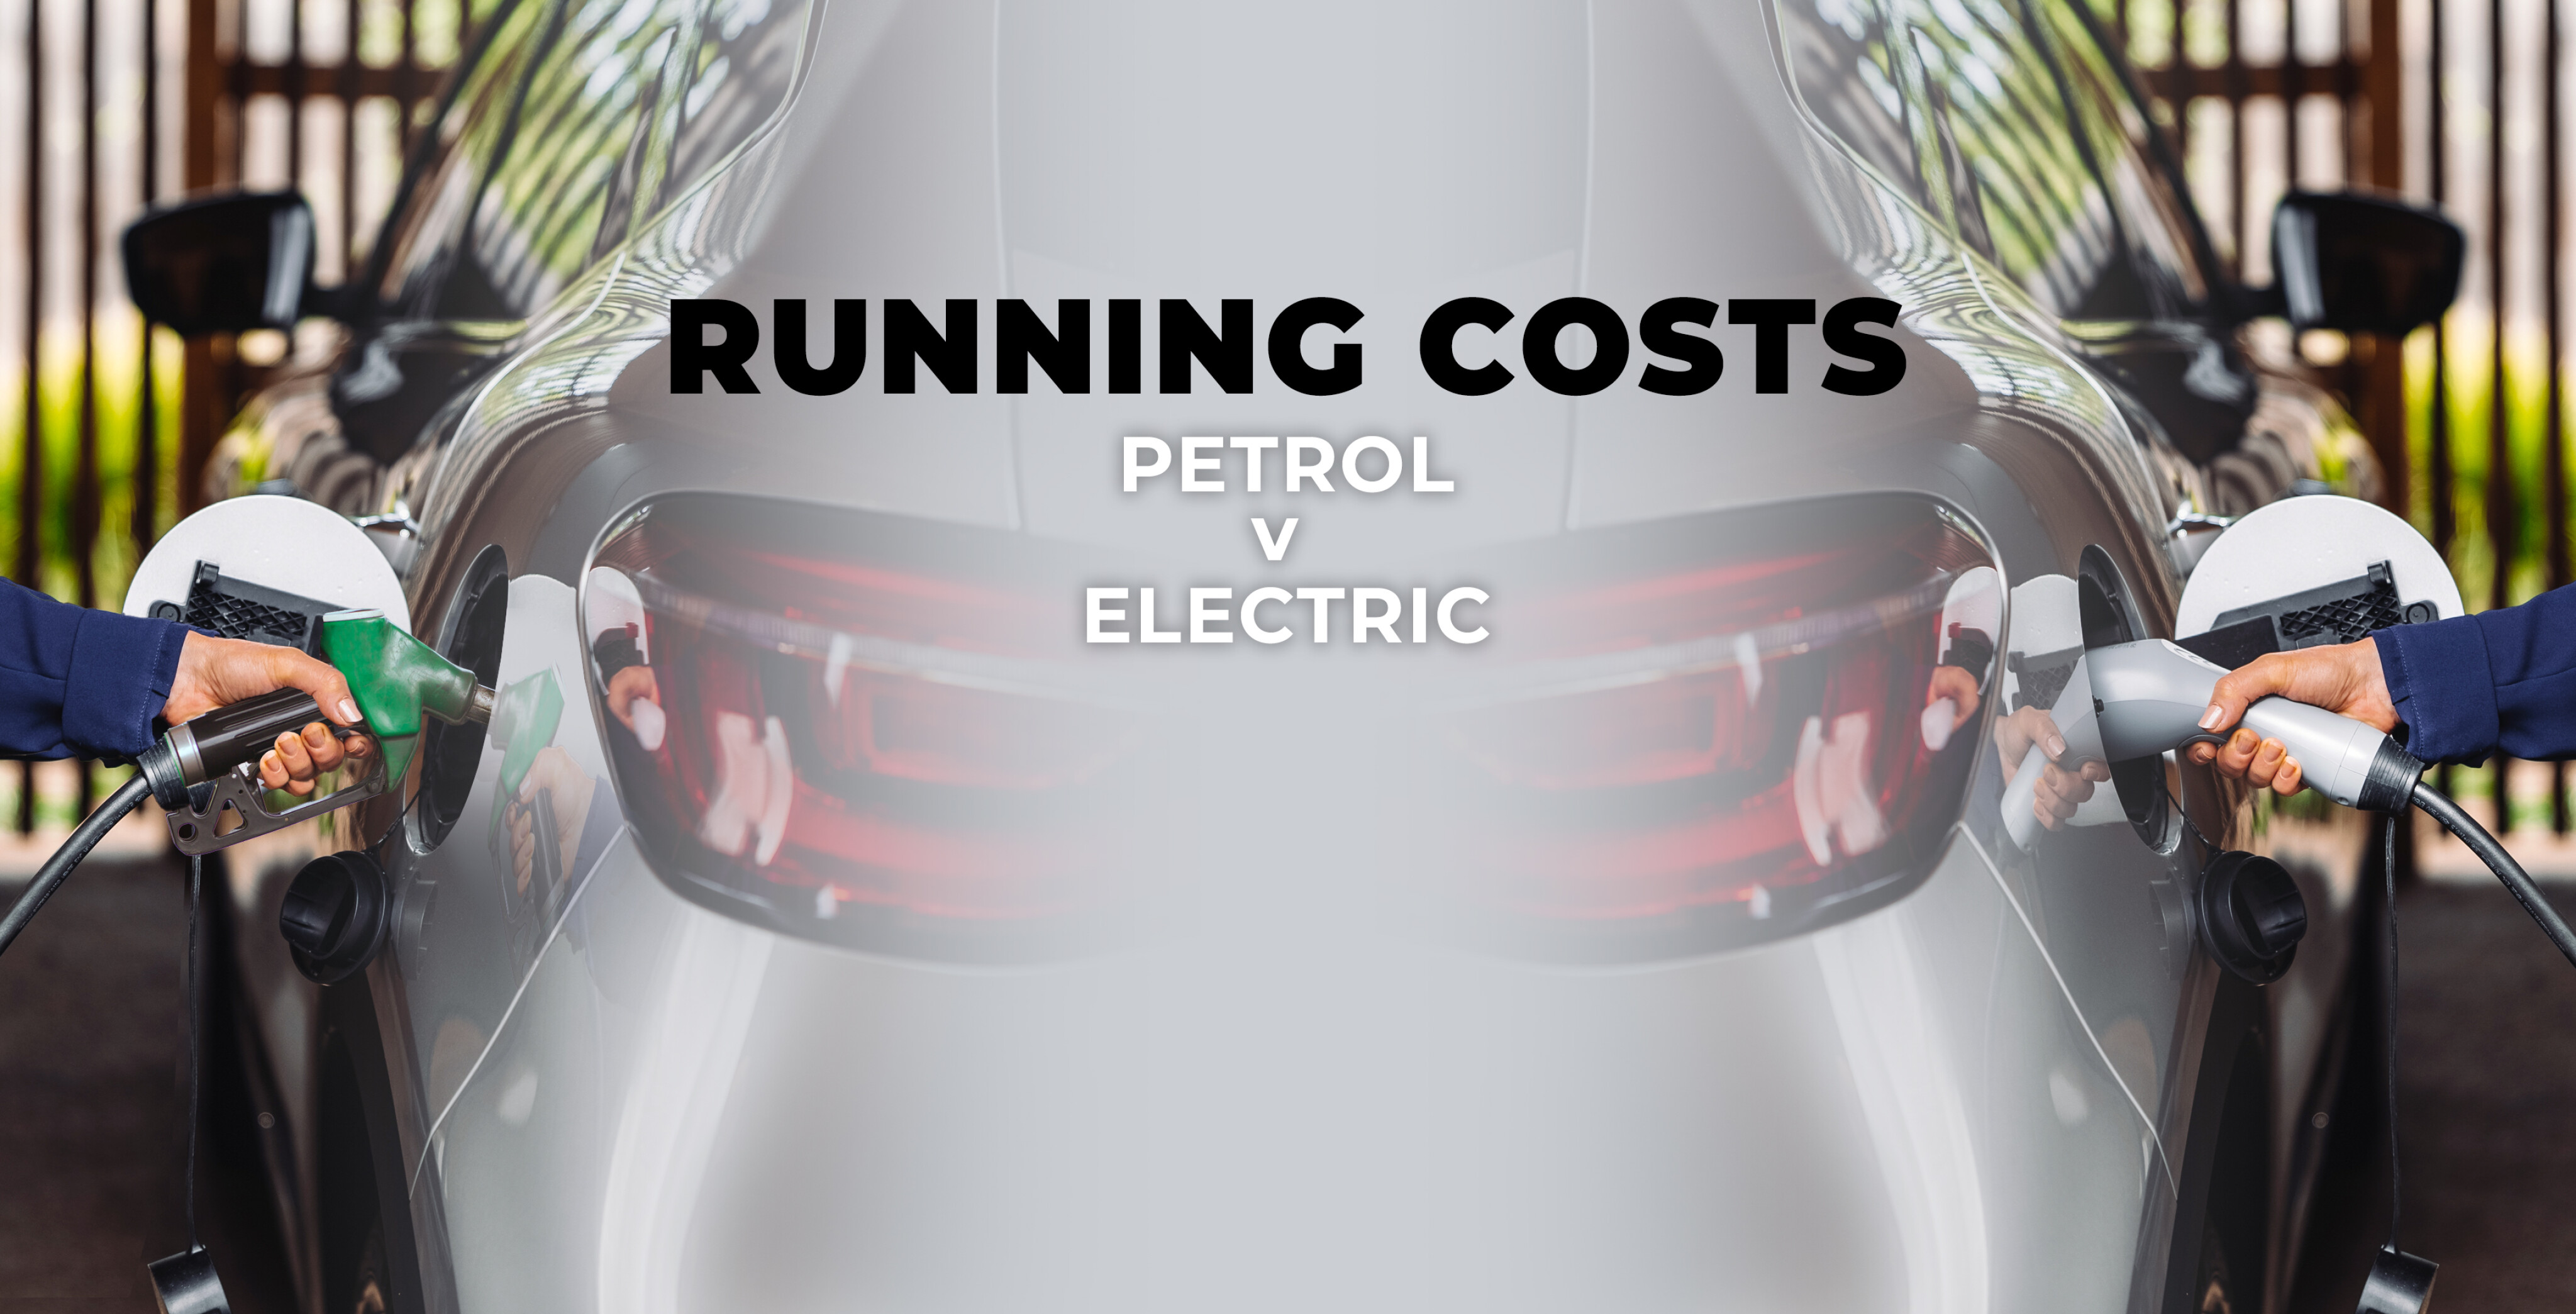 a9ff0932/running costs petrol v electric jpg